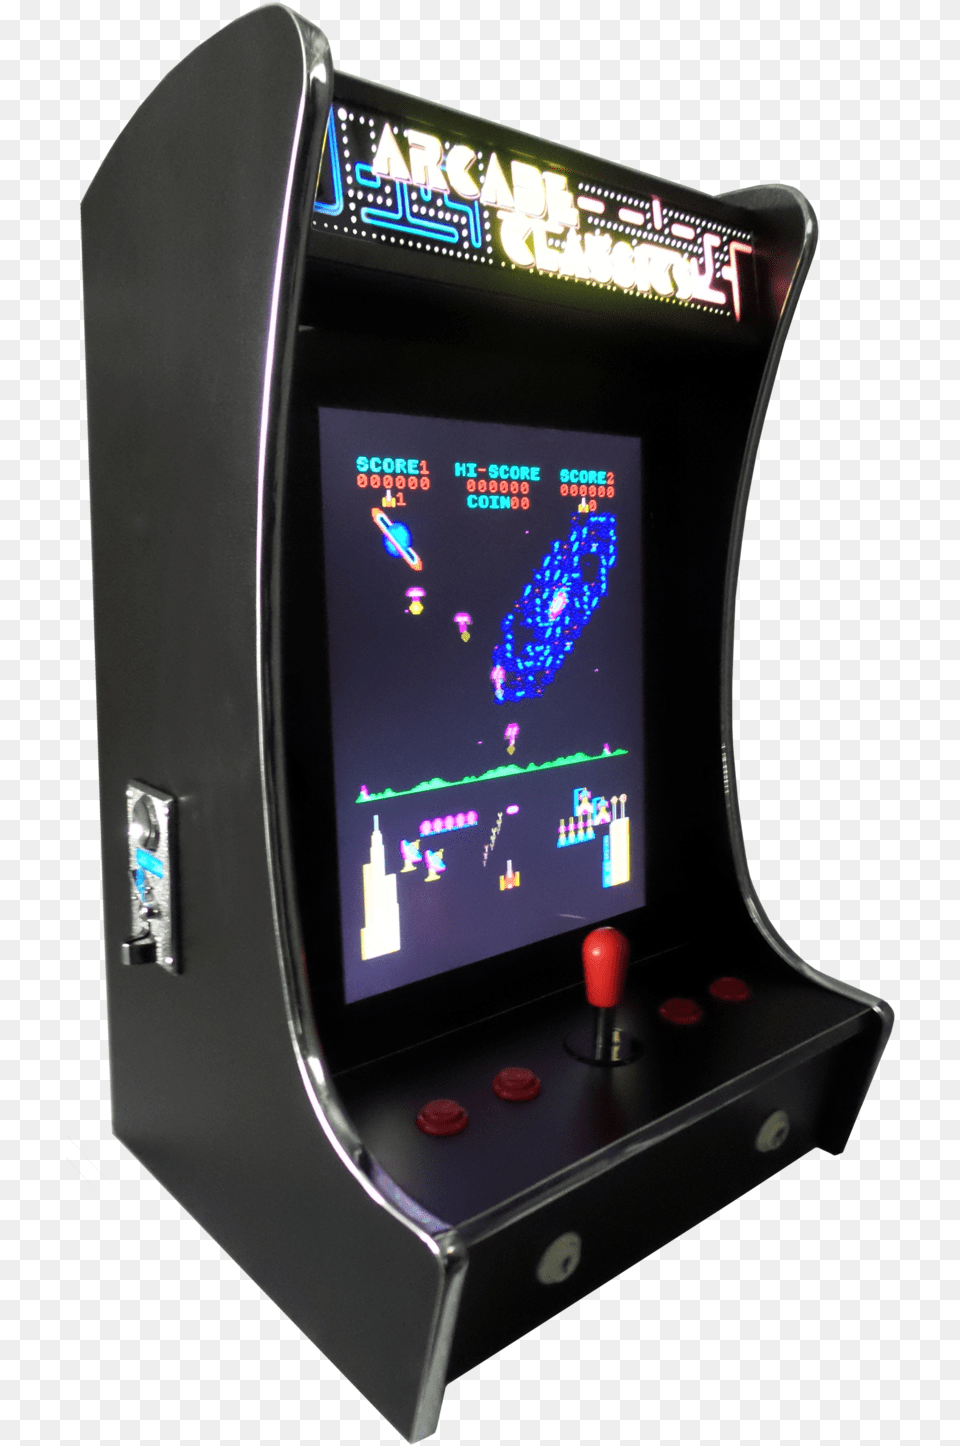 Bartop Arcade Machine Arcade Game, Arcade Game Machine Png Image